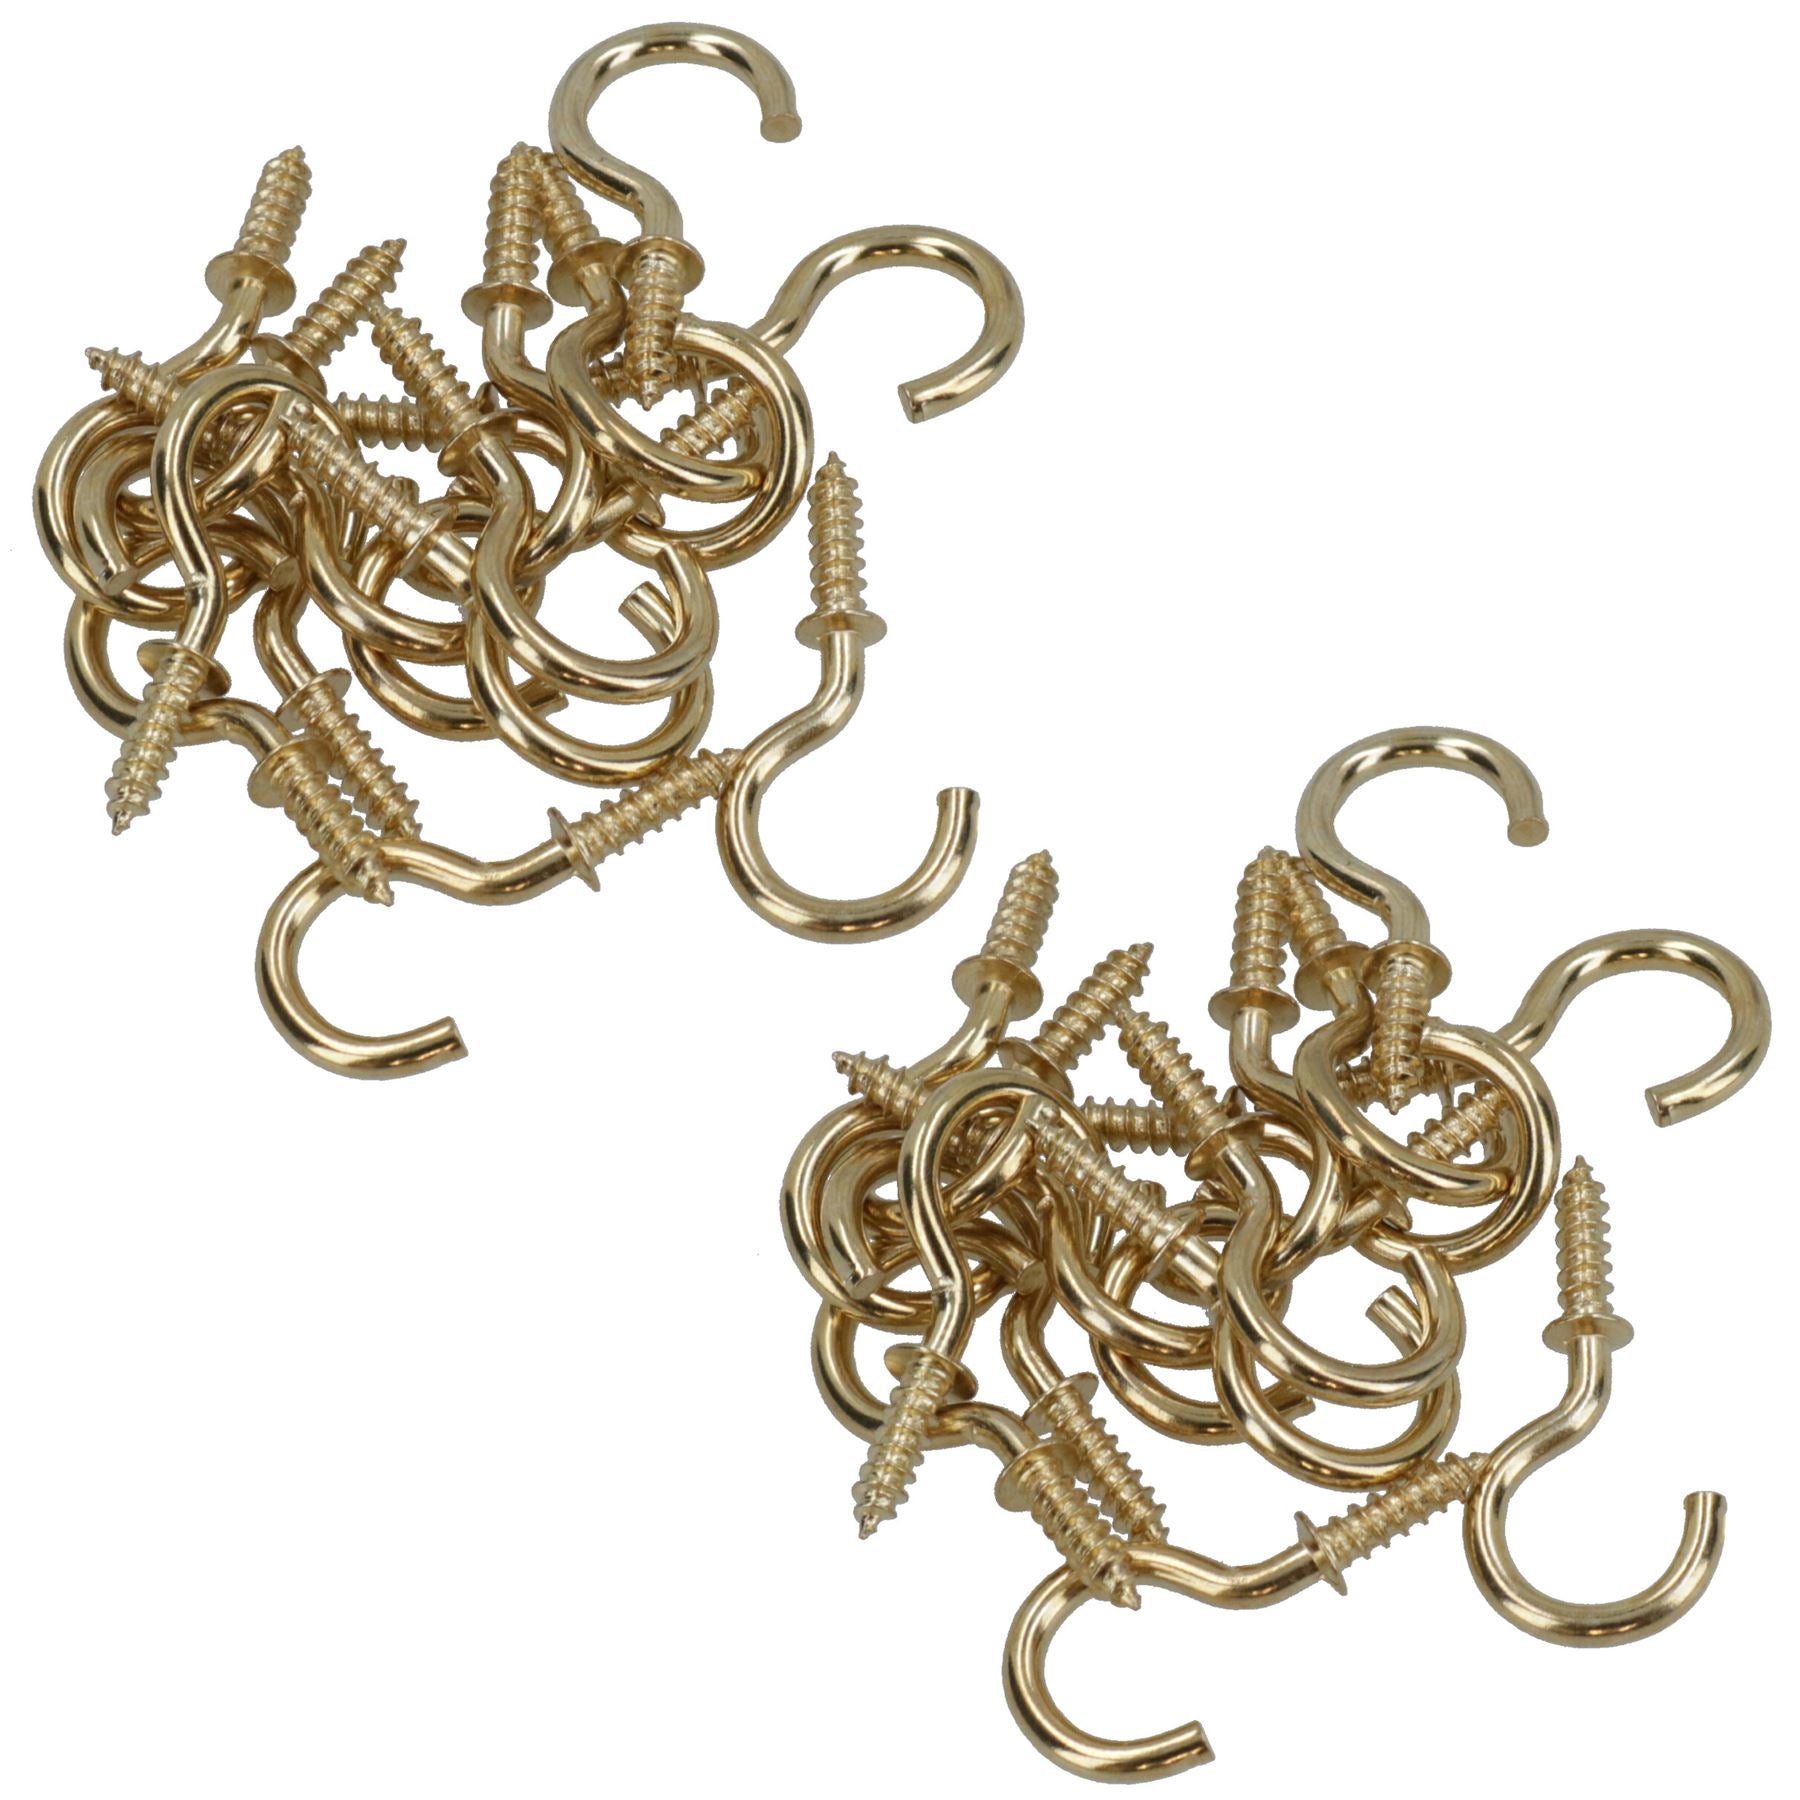 Shouldered Screw Hooks Fasteners Hanger Brass Plated 10mm Dia 19mm Length